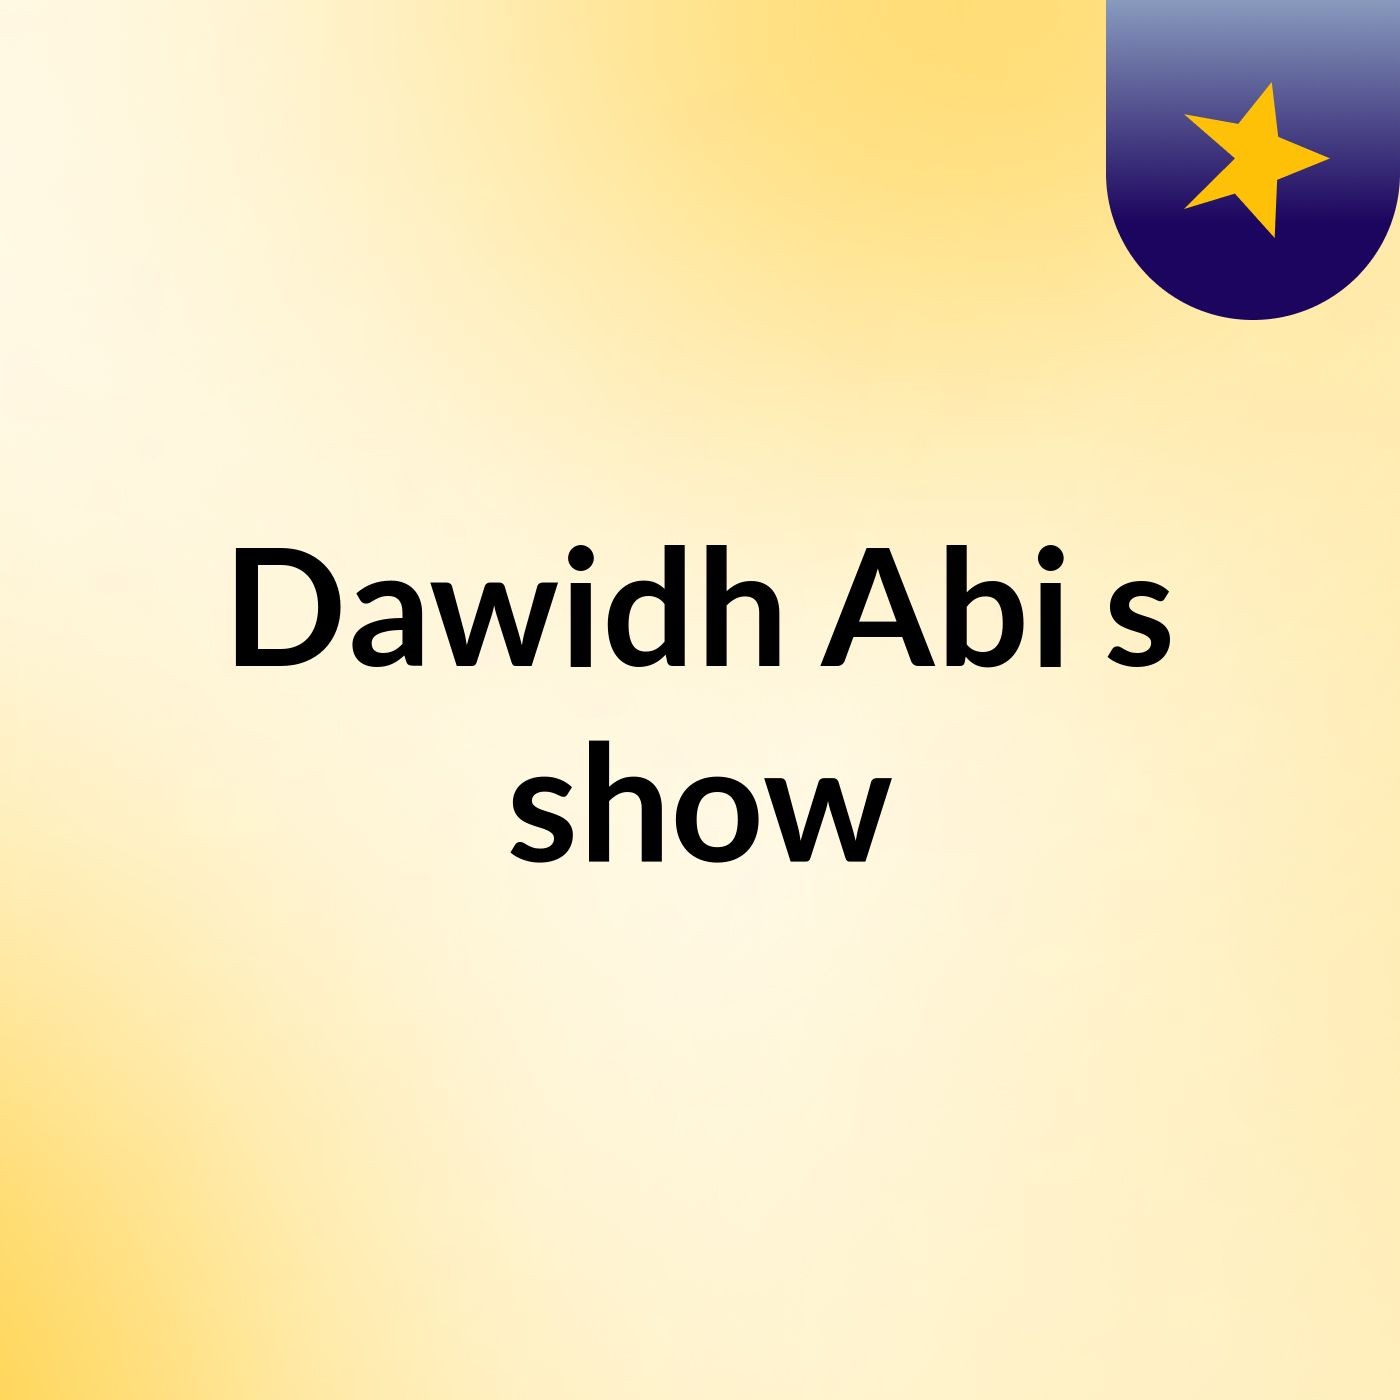 Dawidh Abi's show